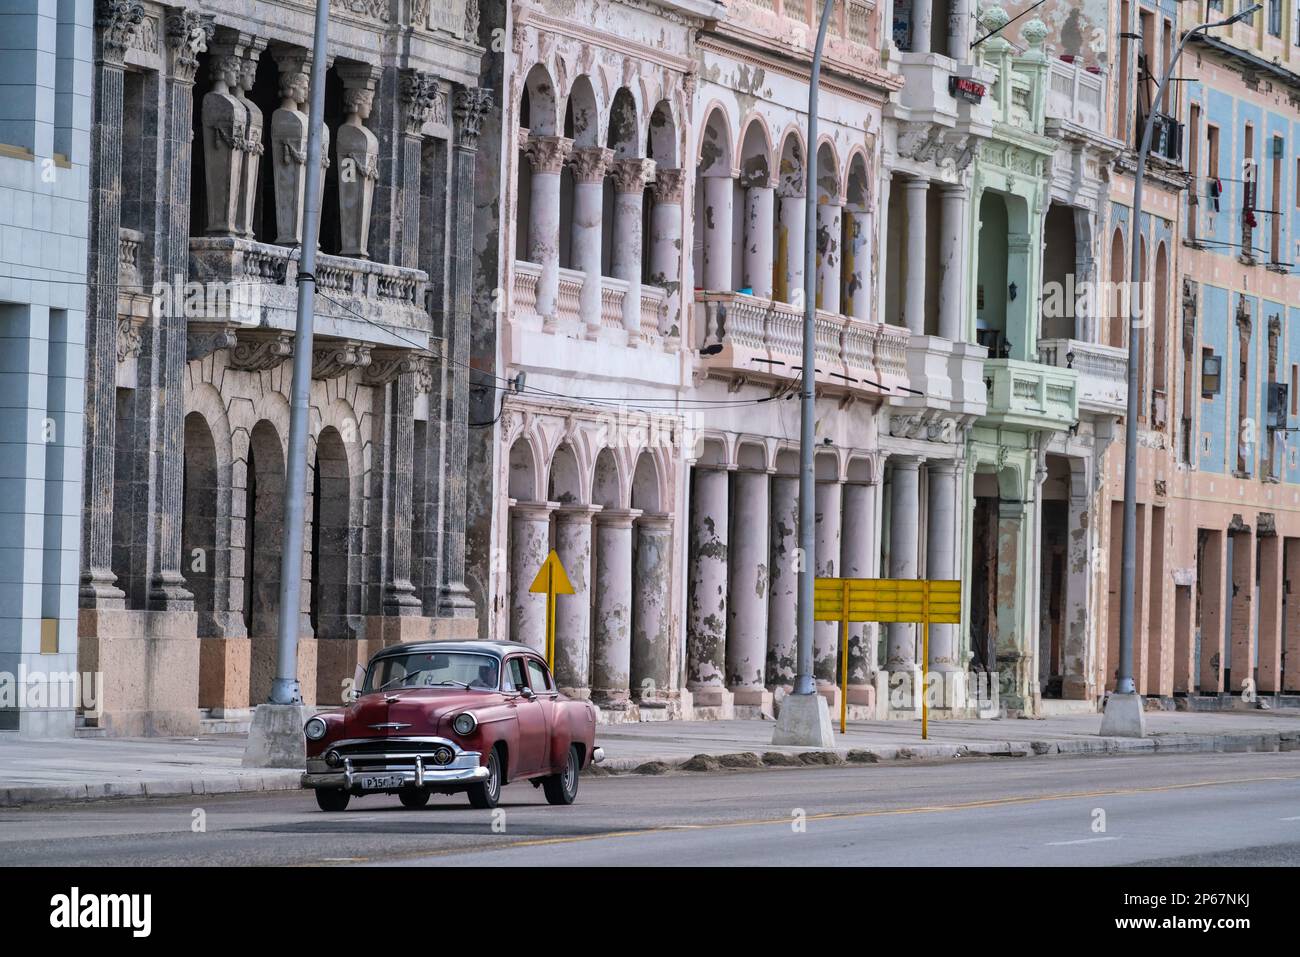 Verblasste Pracht, Stuck, wetterbefallene Häuser am Meer von Malecon, mit rotem Oldtimer, Havanna, Kuba, Westindien, Karibik, Mittelamerika Stockfoto